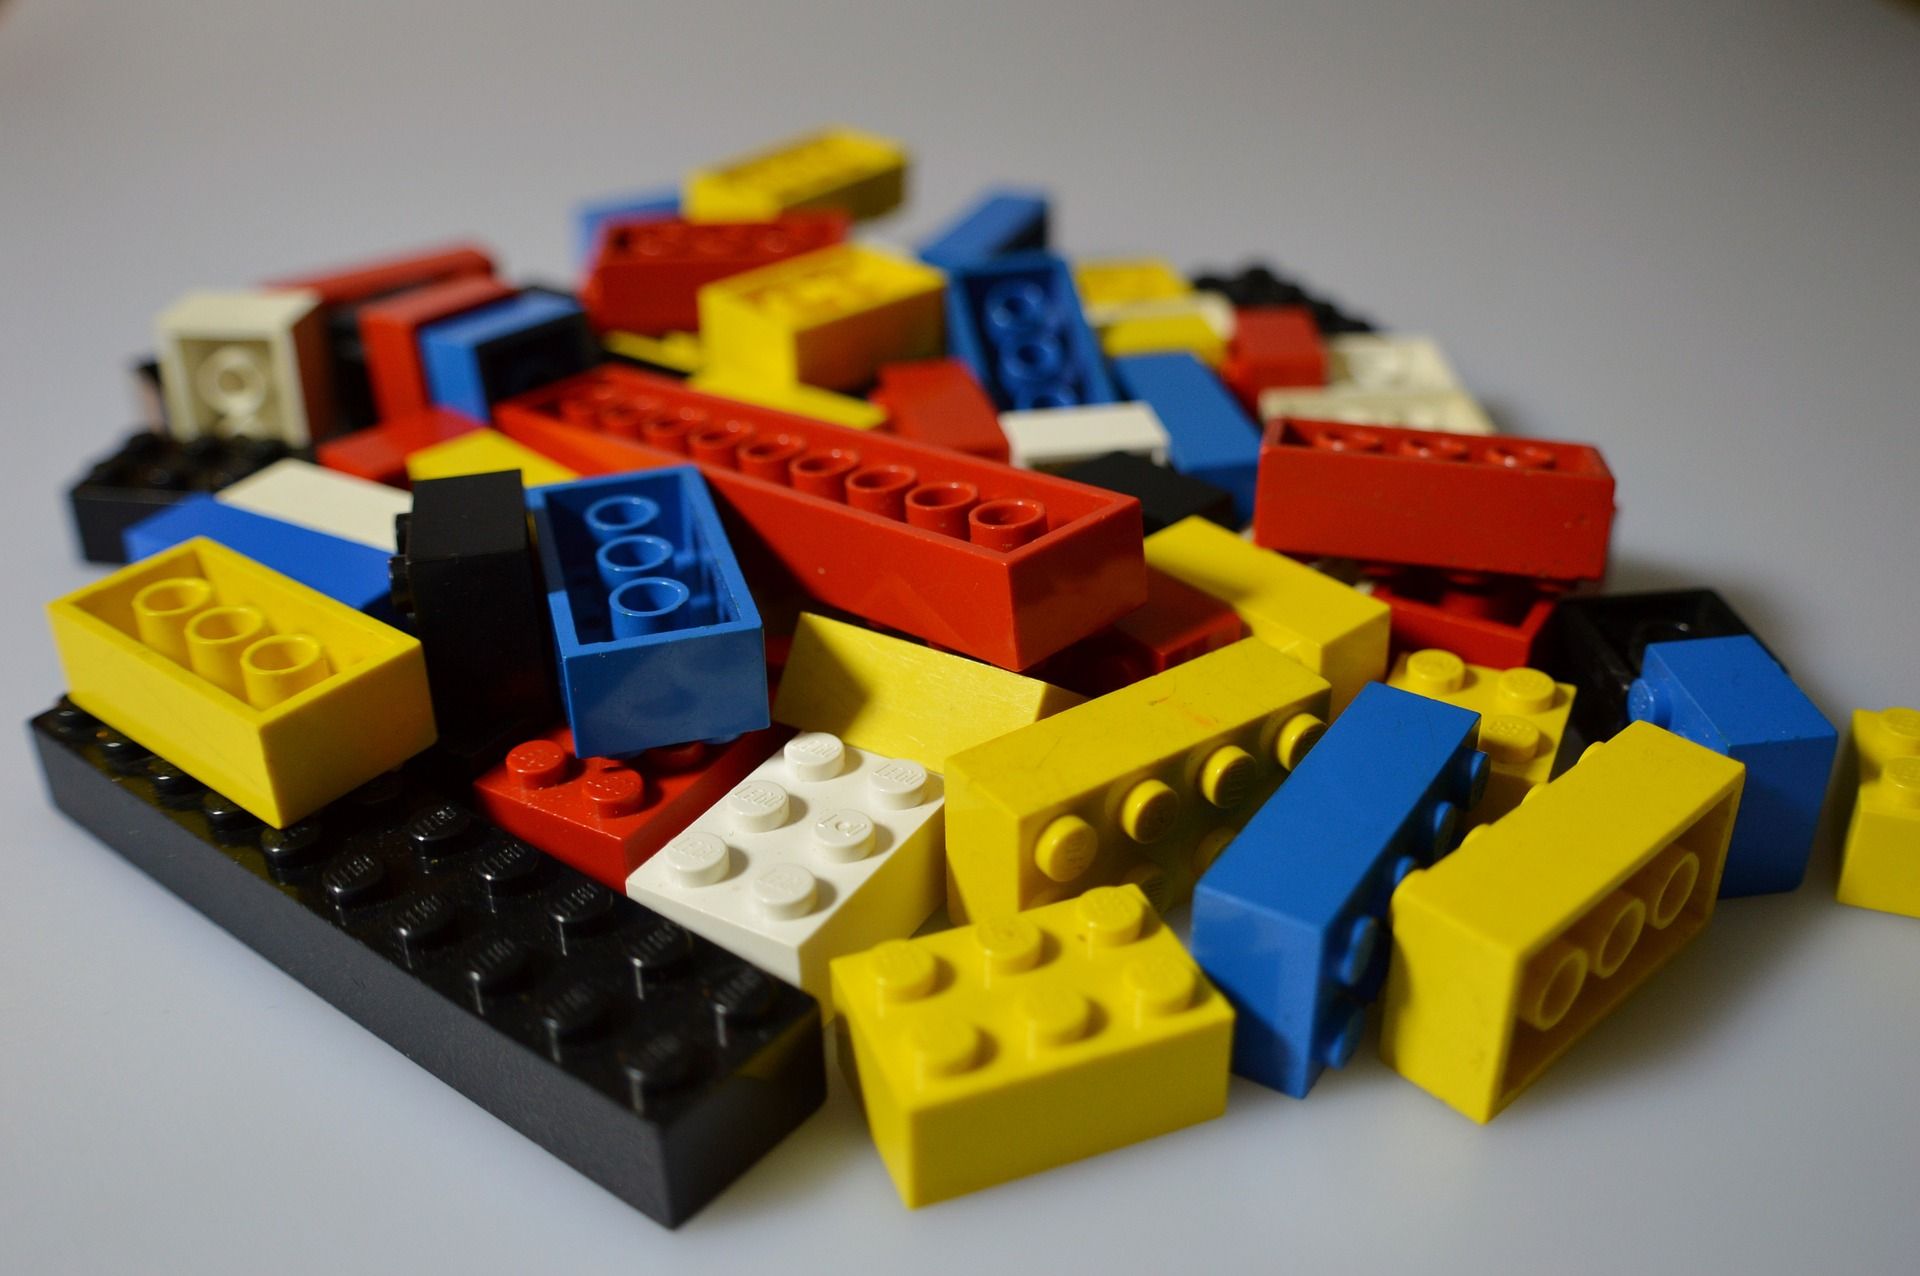 In arrivo i mattoncini Lego ecologici